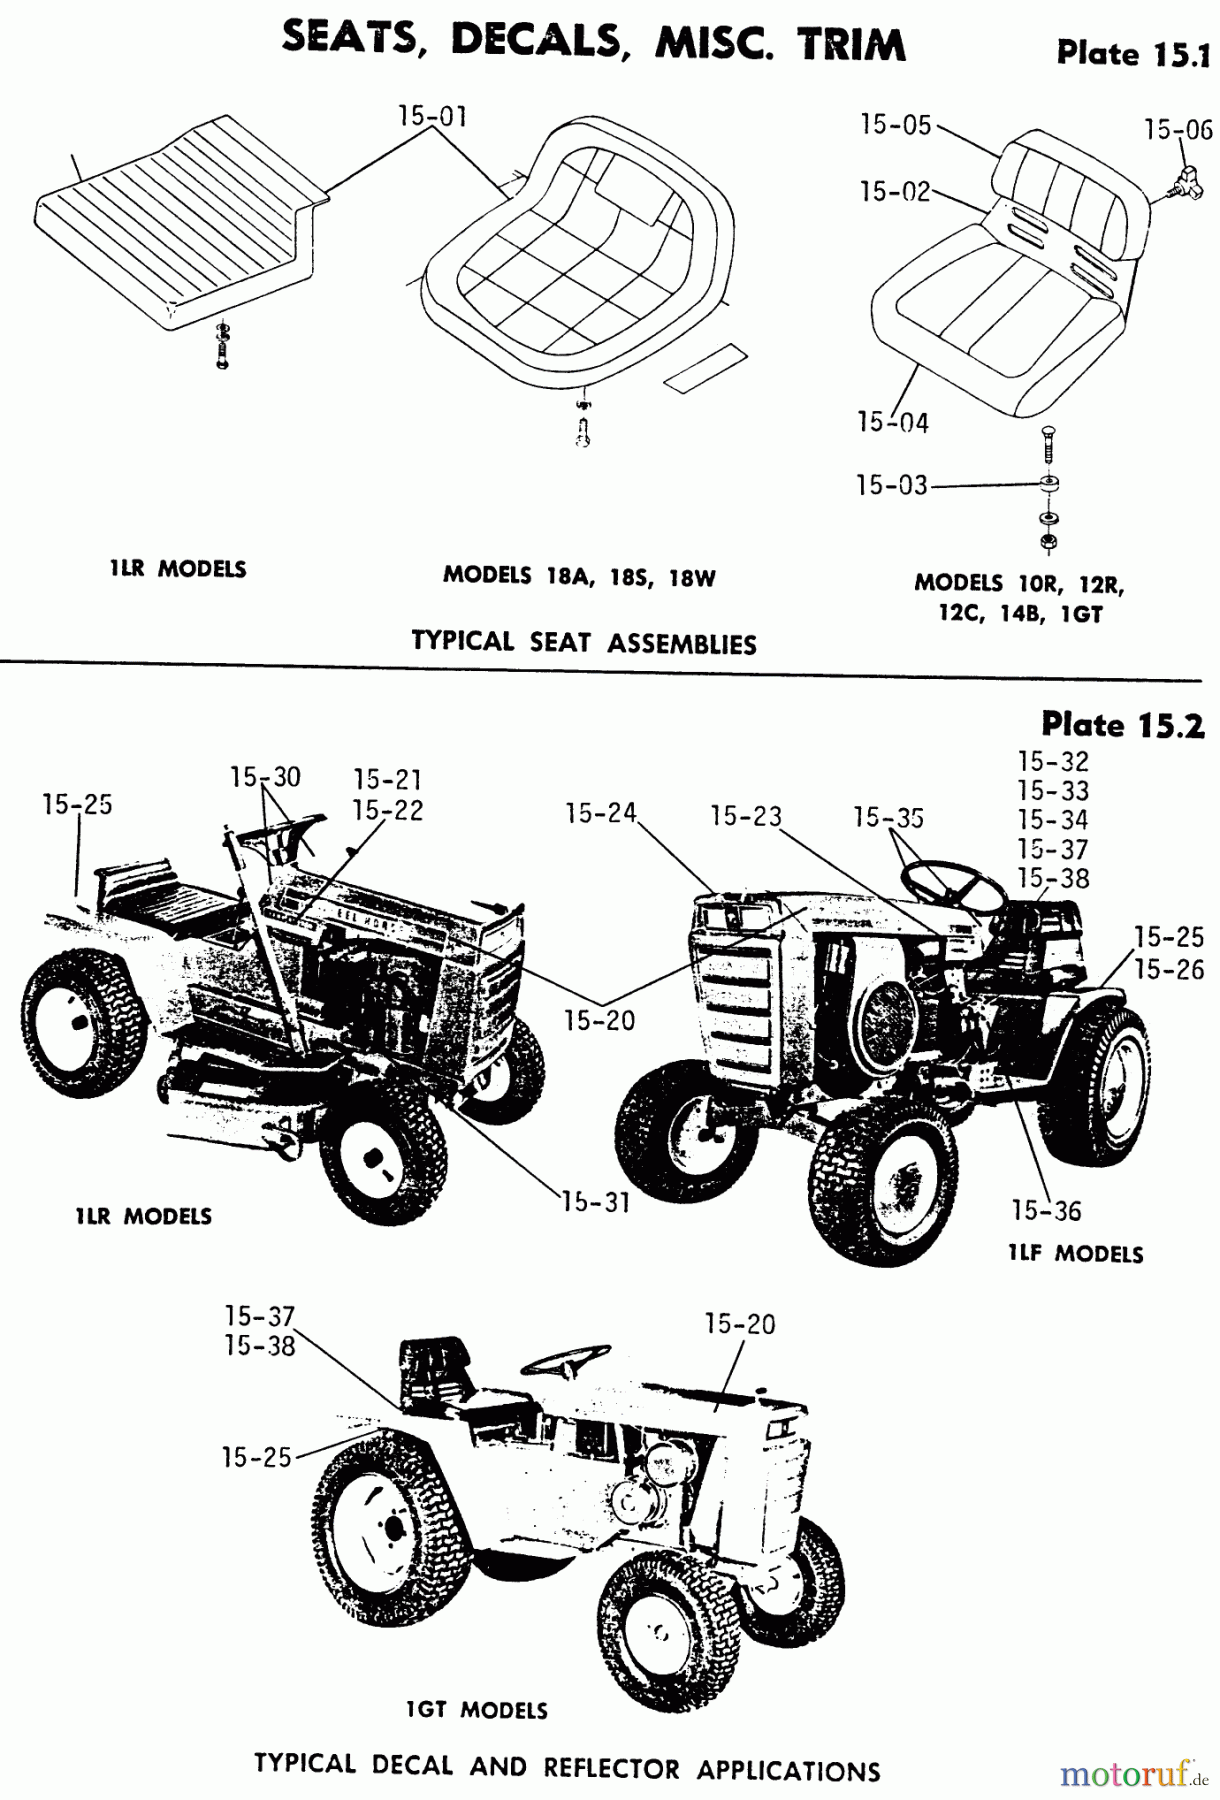  Toro Neu Mowers, Lawn & Garden Tractor Seite 1 1-0100 - Toro WorkHorse 800 Tractor, 1971 15.000 SEATS, DECALS, MISC. TRIM-15.000 SEAT ASSEMBLIES (PLATE 15.1)